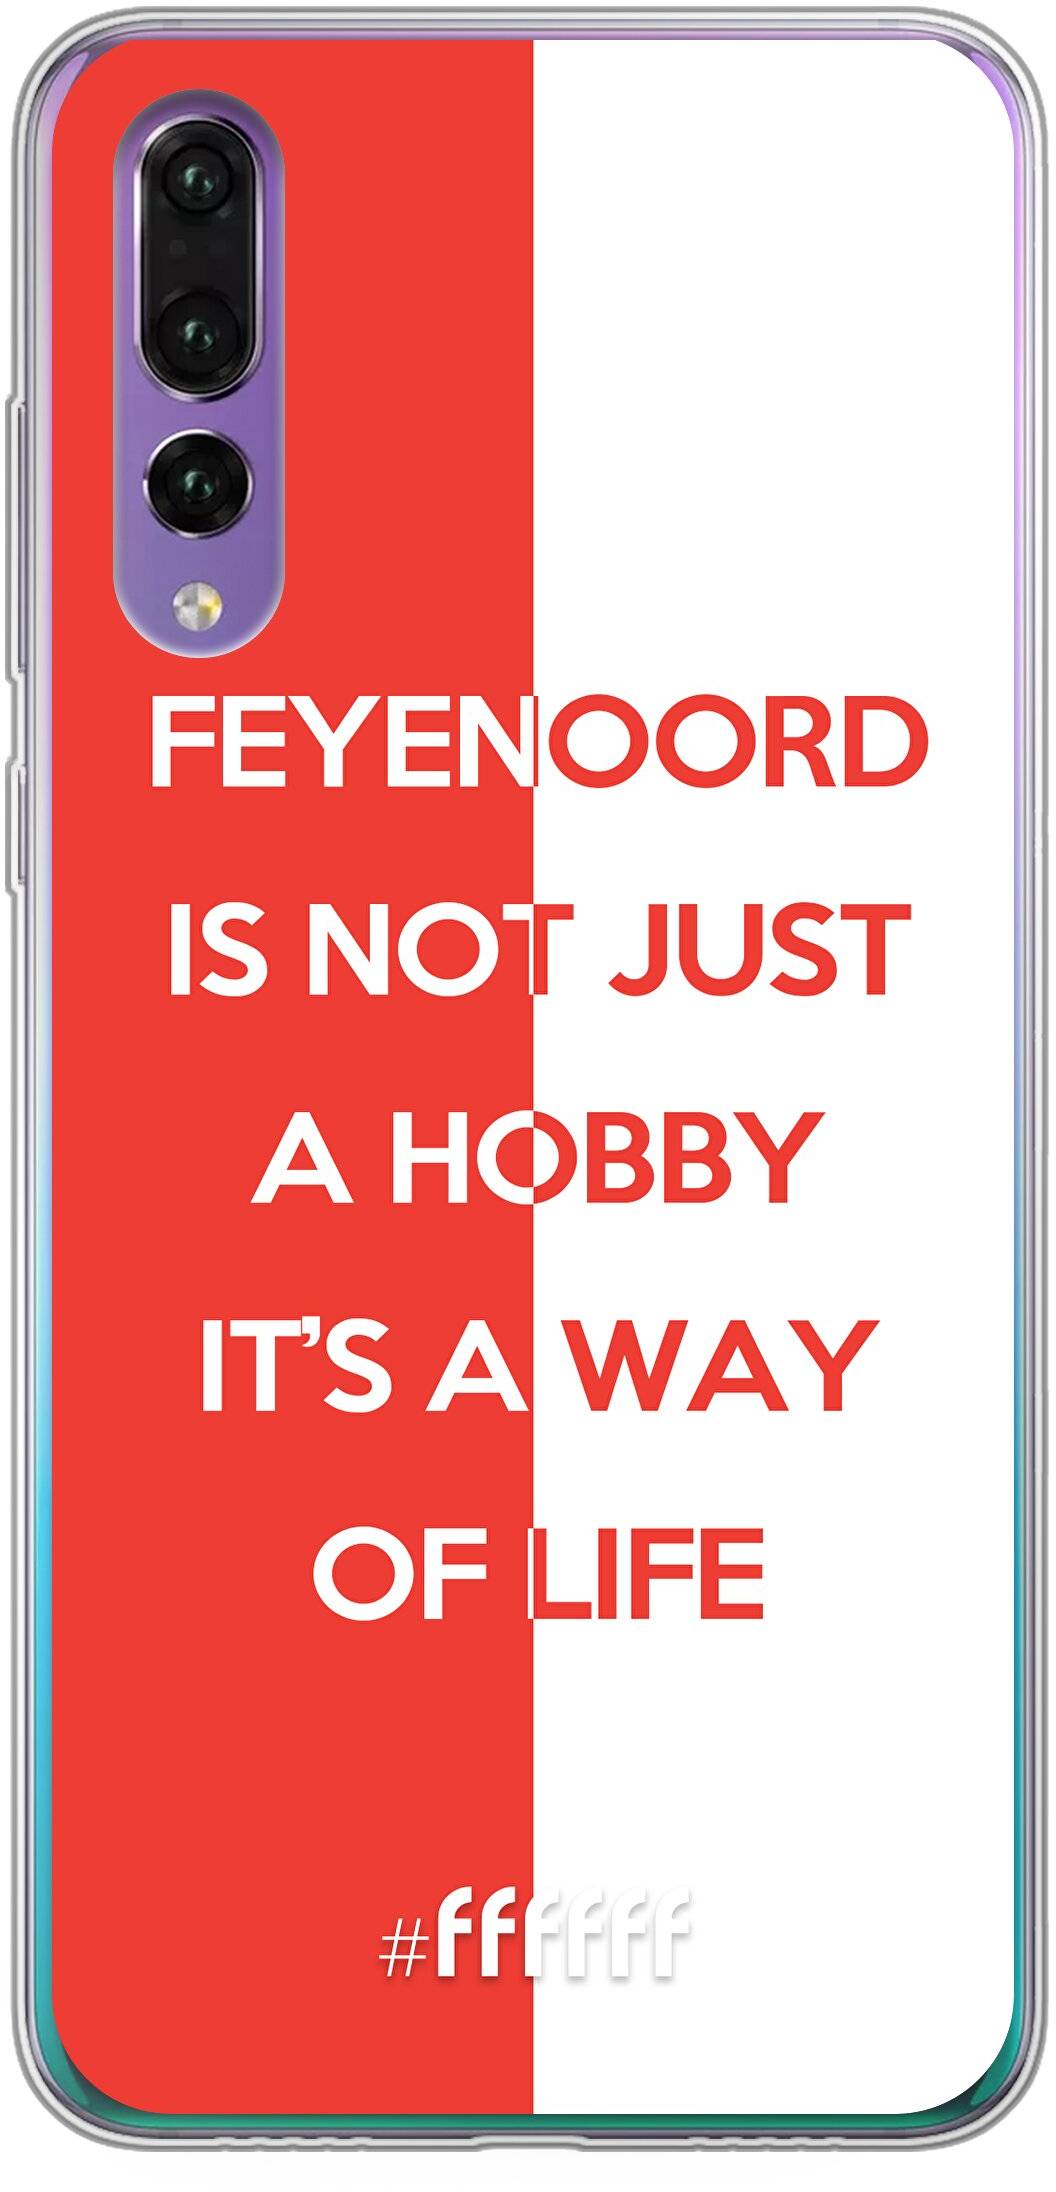 Feyenoord - Way of life P30